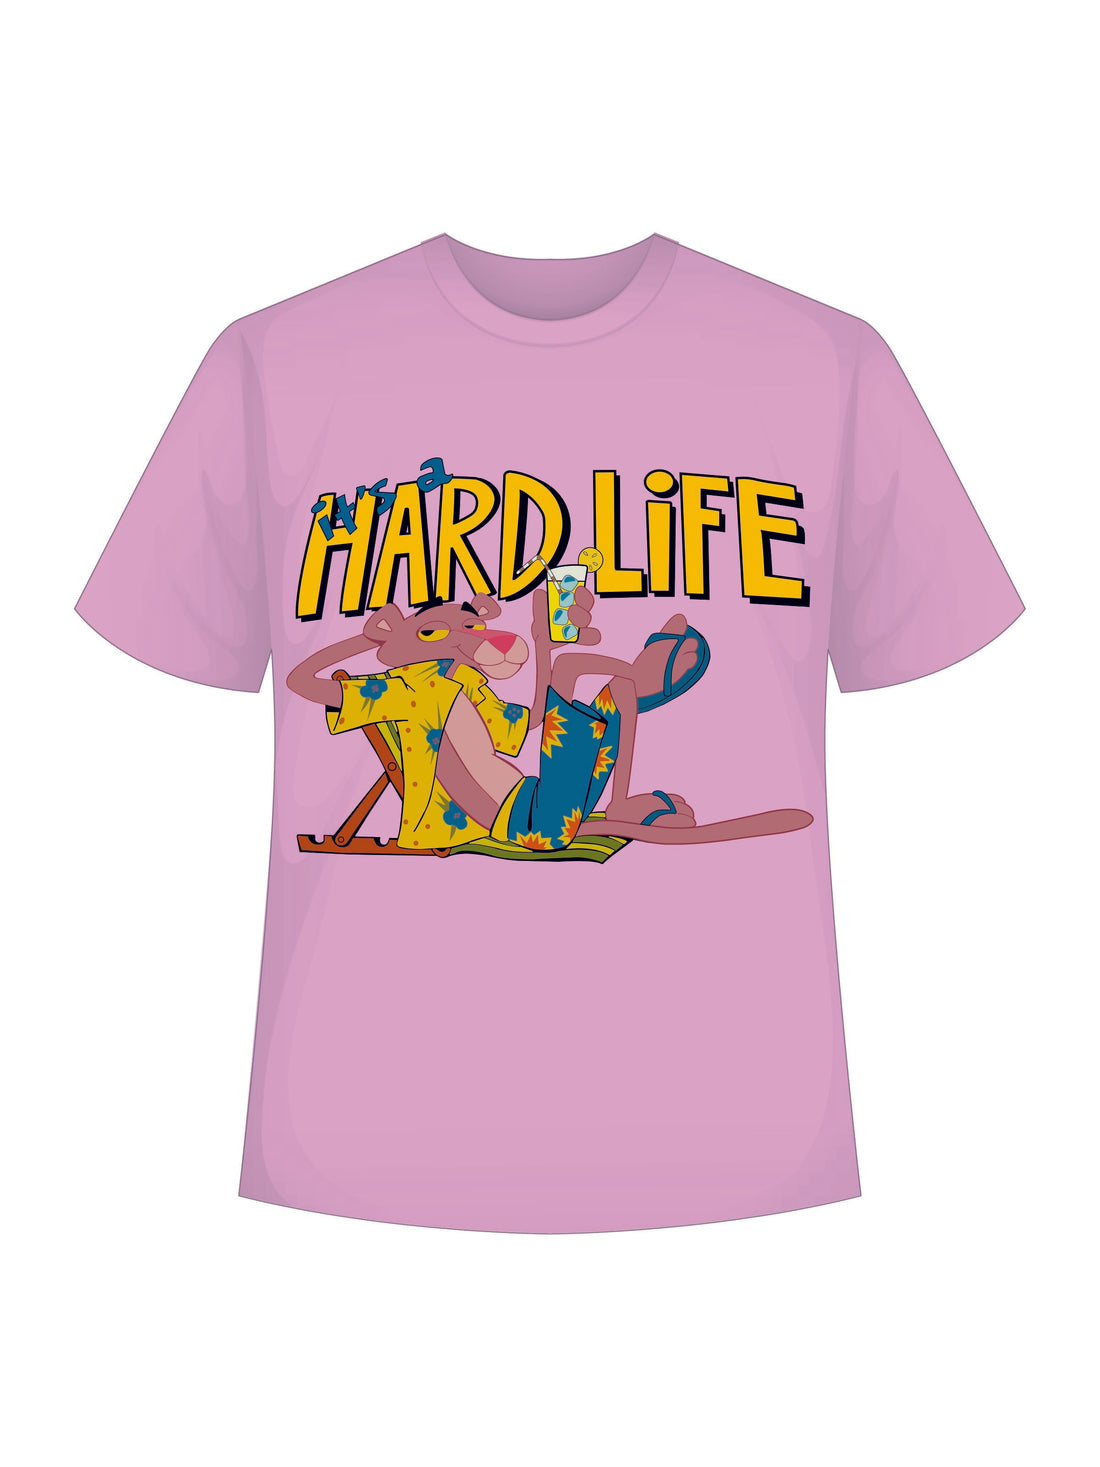 Hard Life- Pink Panther Regular Tee For Men and Women